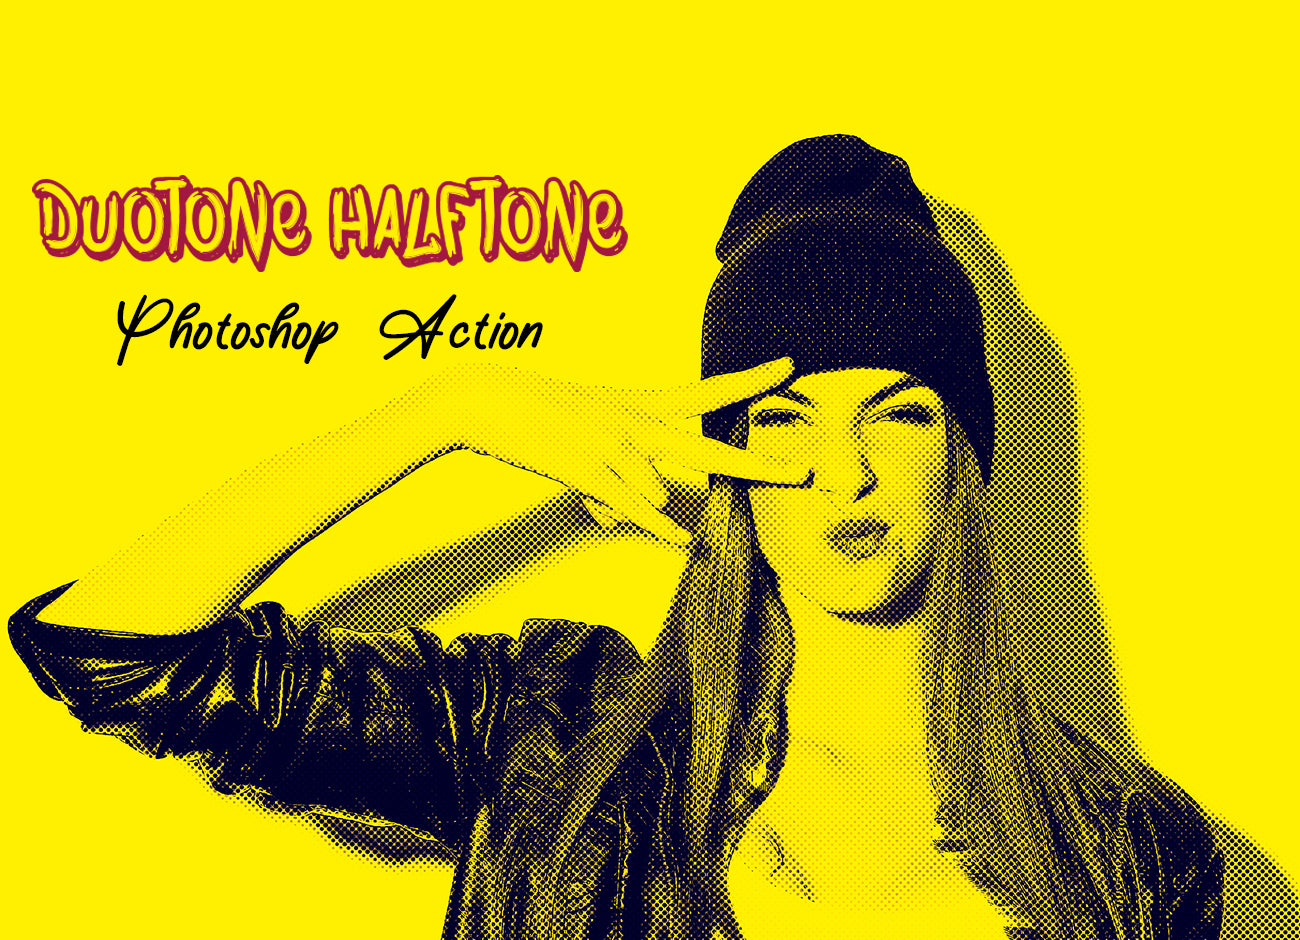 15-In-1 Premio Effect Photoshop Actions Bundle - Artixty